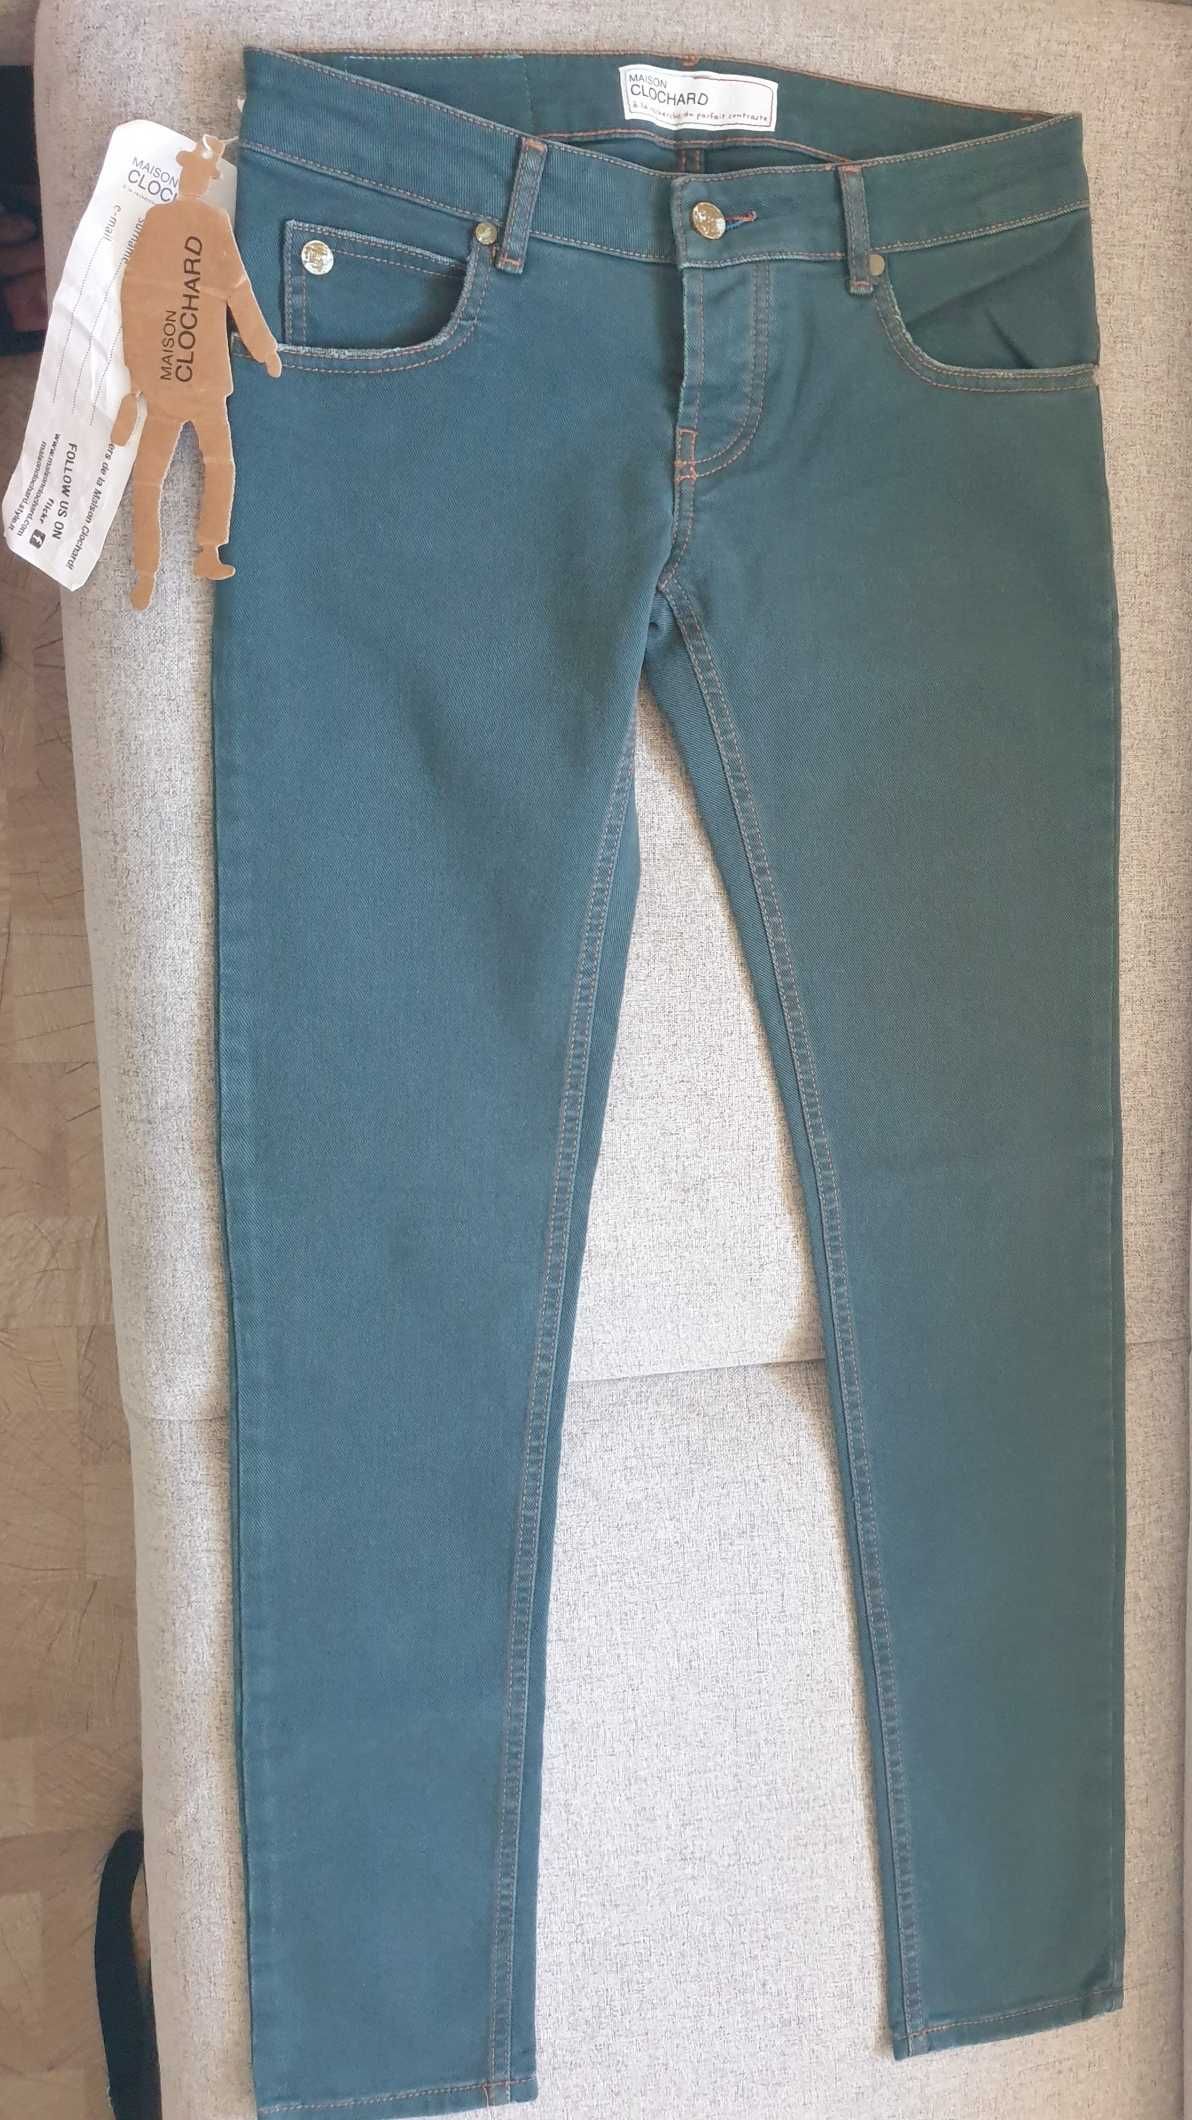 Jeans slim fit MAISON CLOCHARD, Made in Italy, Noi, cul verde-turcoaz